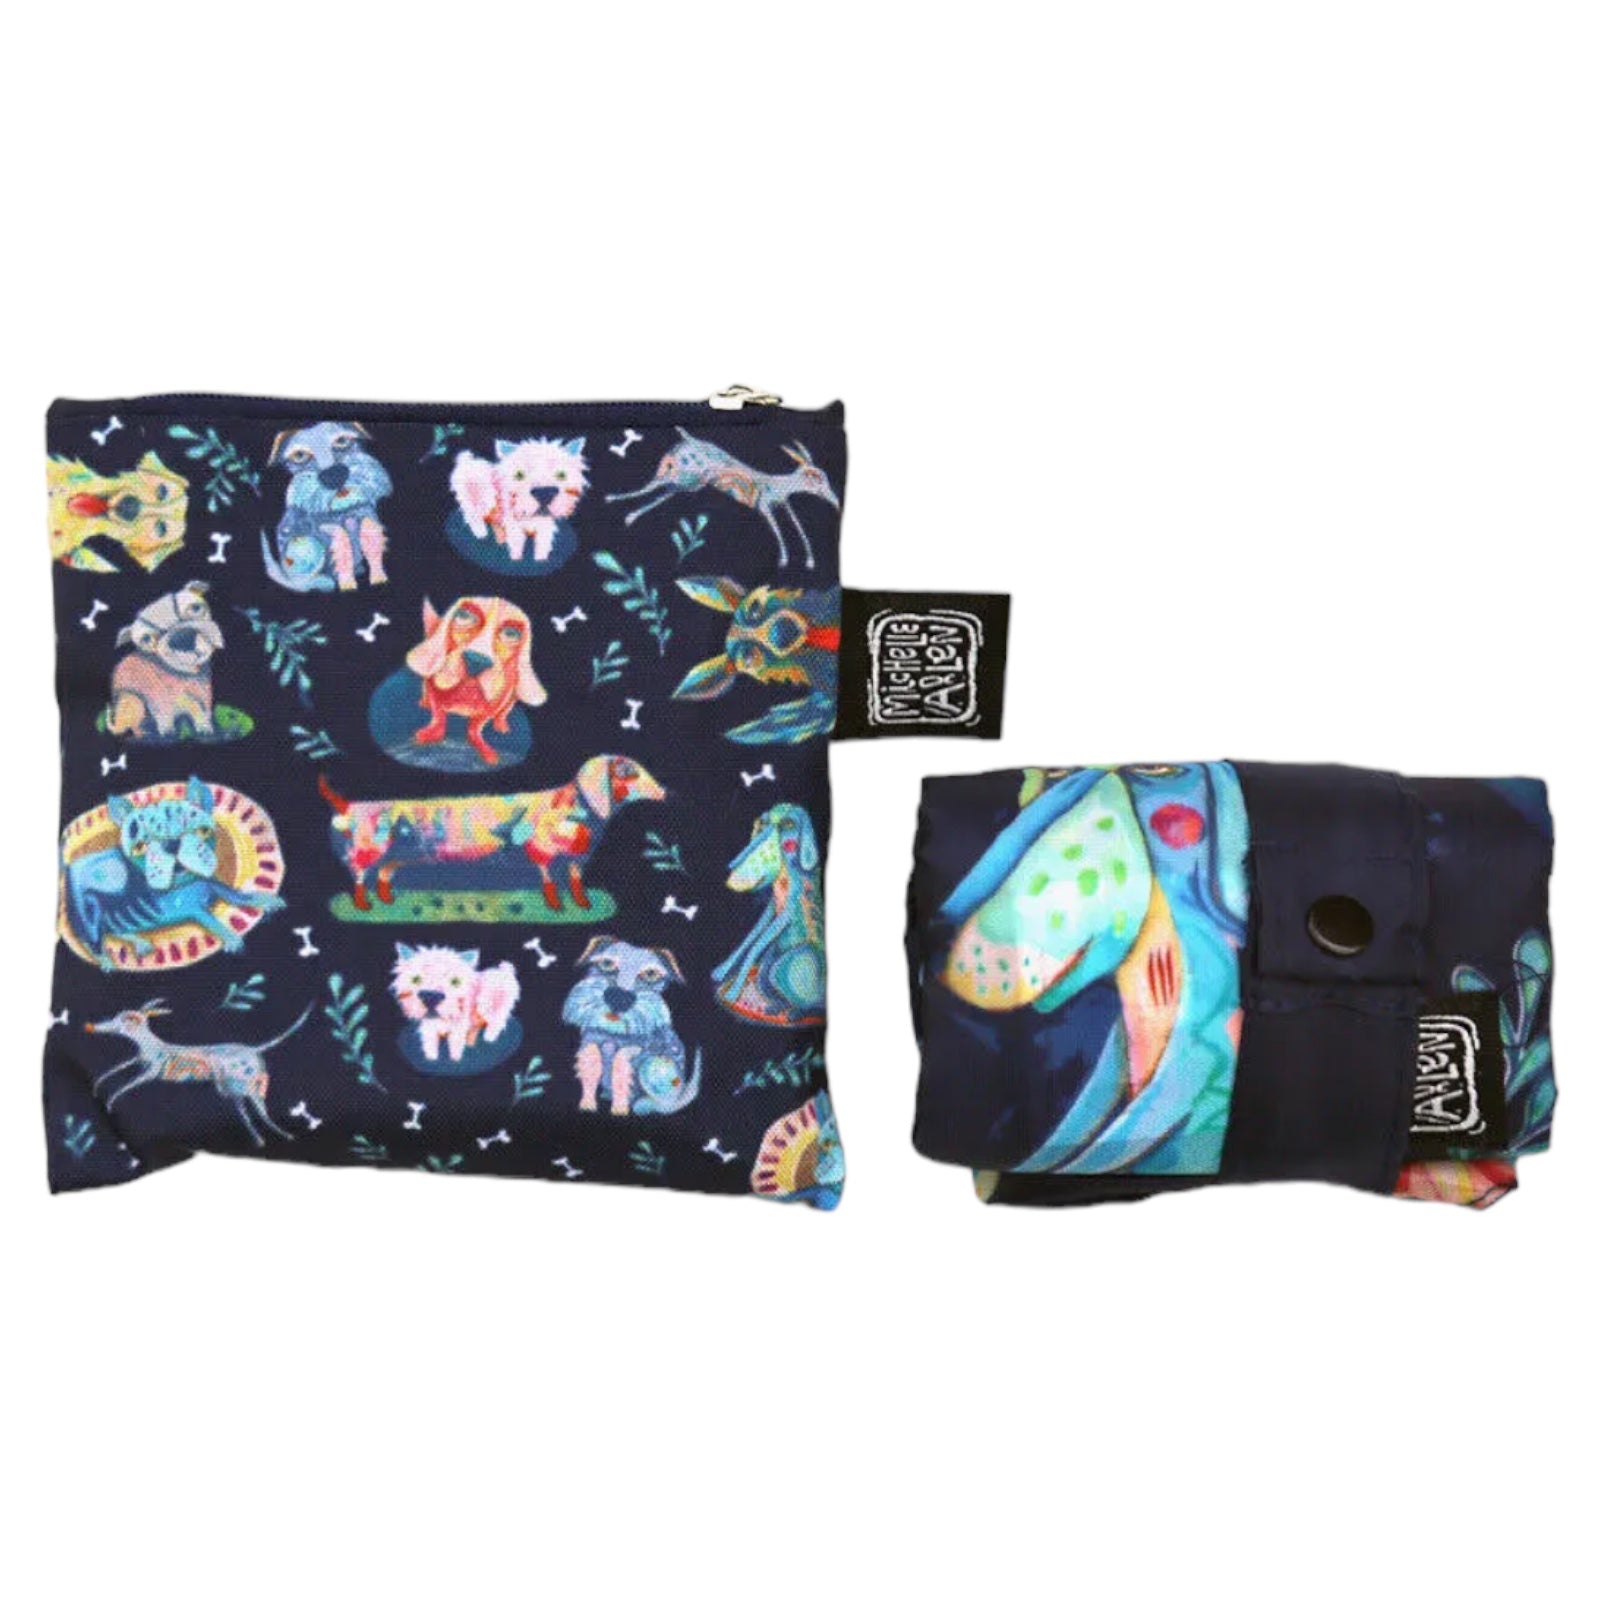 Lemon Myrtle Soap Allen Designs Bag Dog Lovers Gift - The Renmy Store Homewares & Gifts 